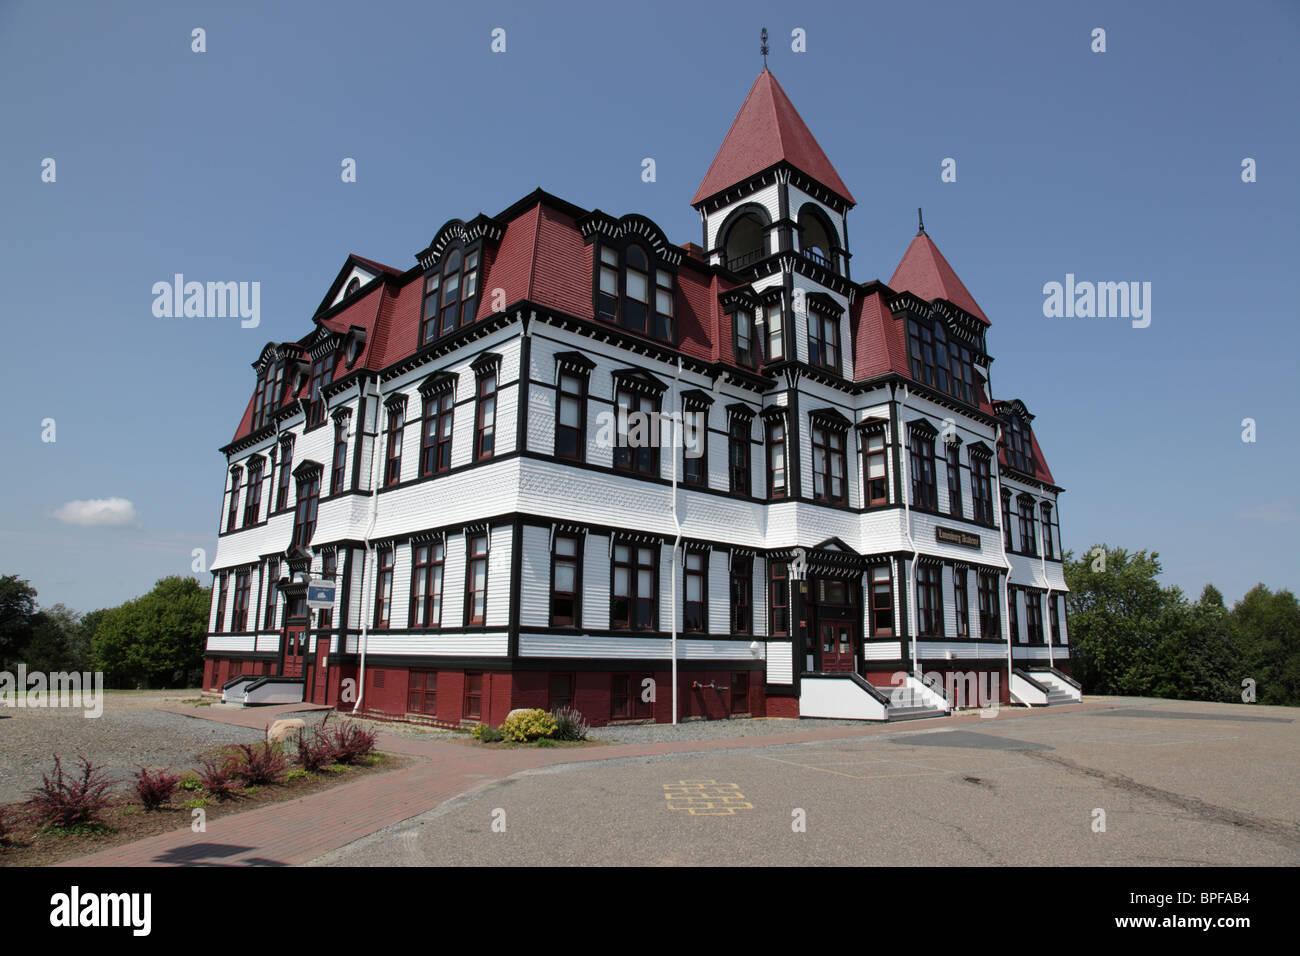 Academy school building (19th century) in the city of Lunenburg, Nova Scotia, Canada, North America.Photo by Willy Matheisl Stock Photo